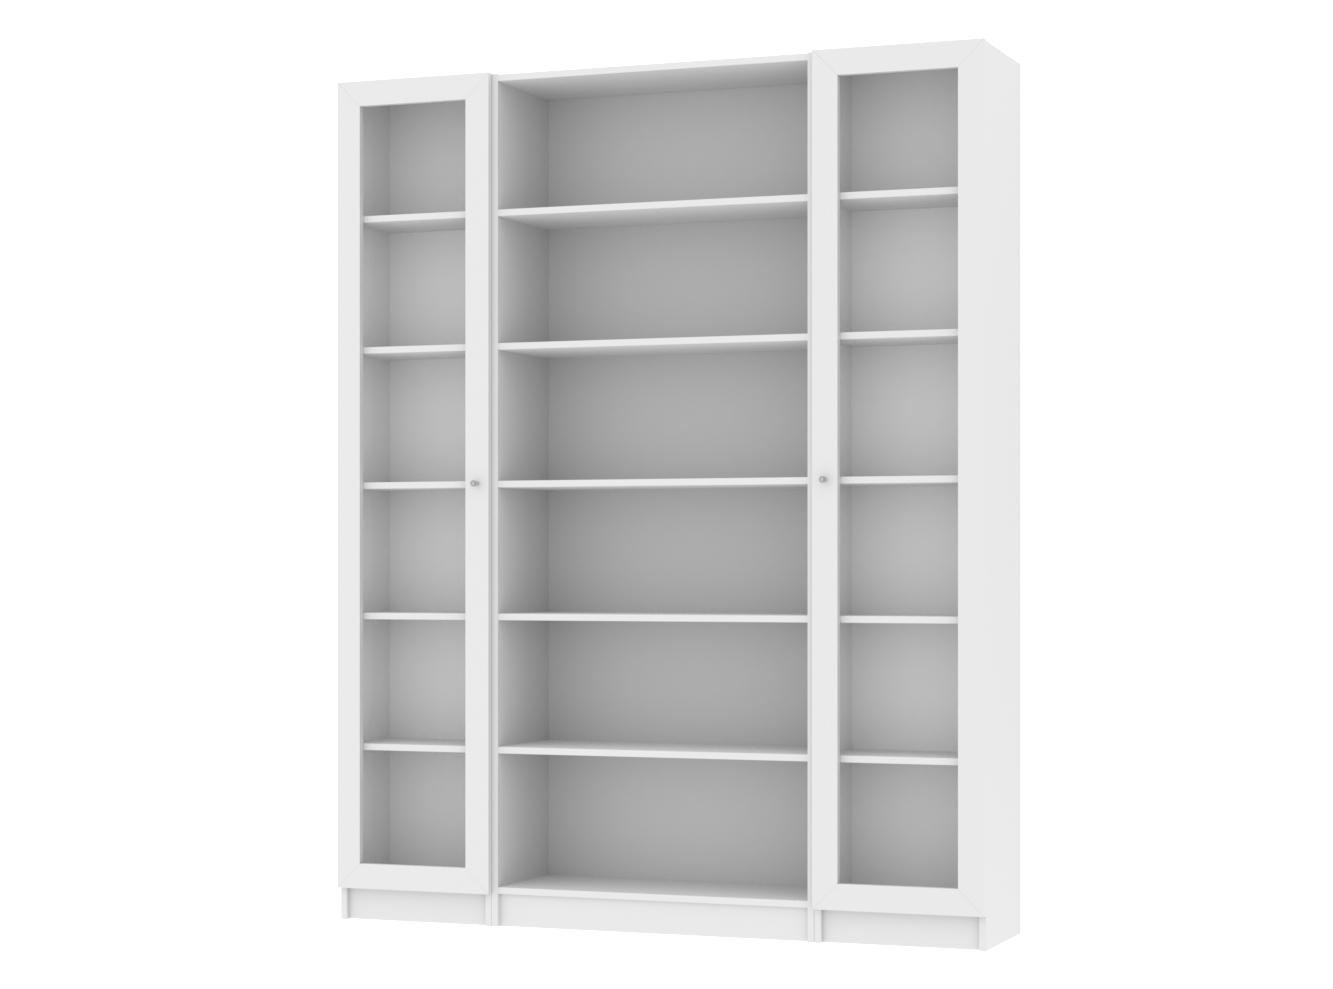 Книжный шкаф Билли 423 white ИКЕА (IKEA) изображение товара